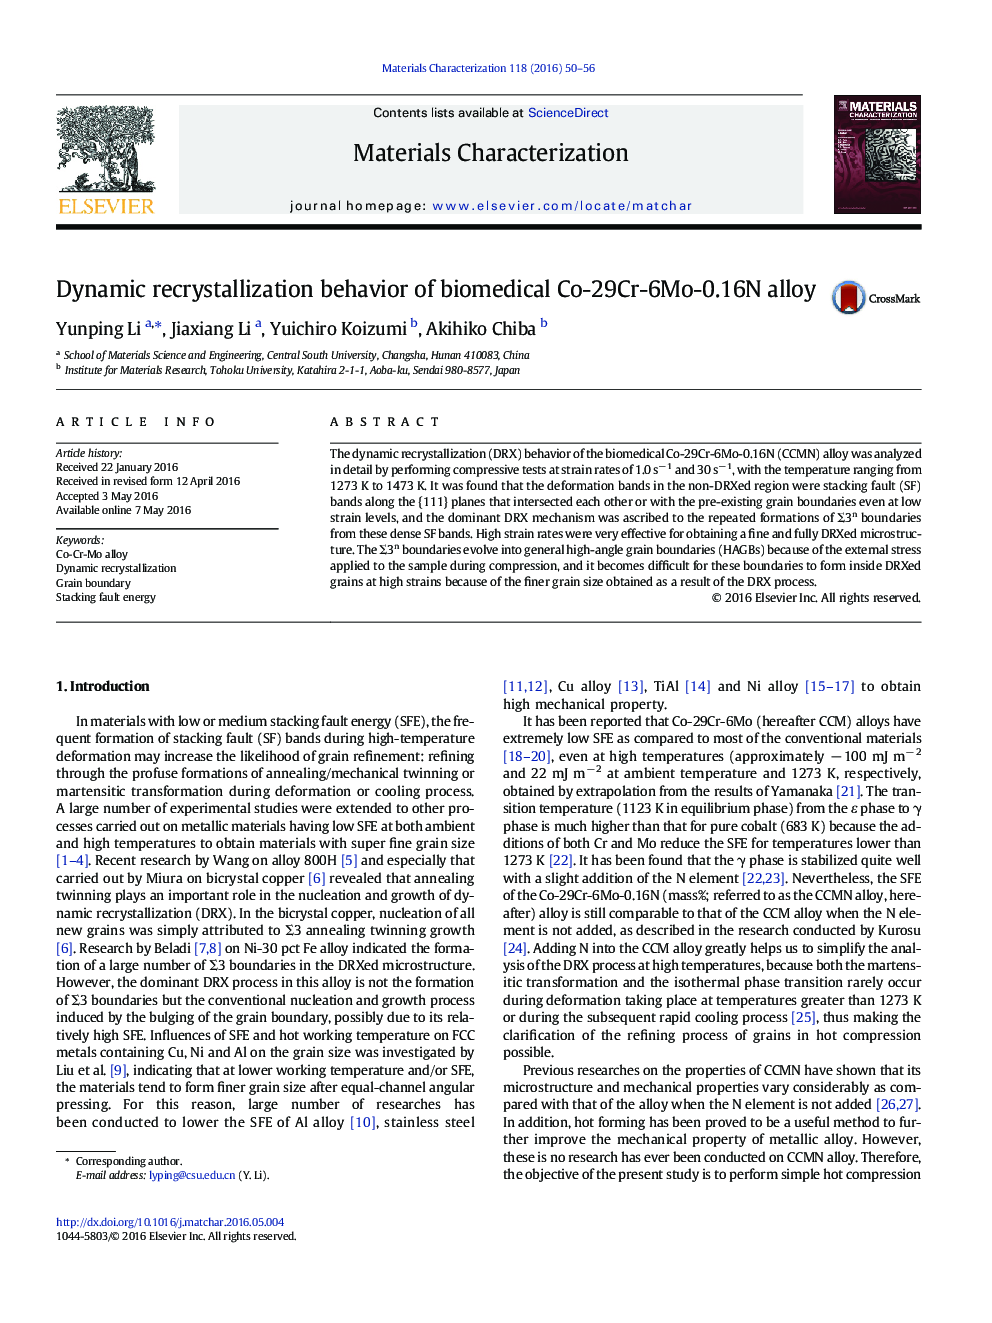 Dynamic recrystallization behavior of biomedical Co-29Cr-6Mo-0.16N alloy